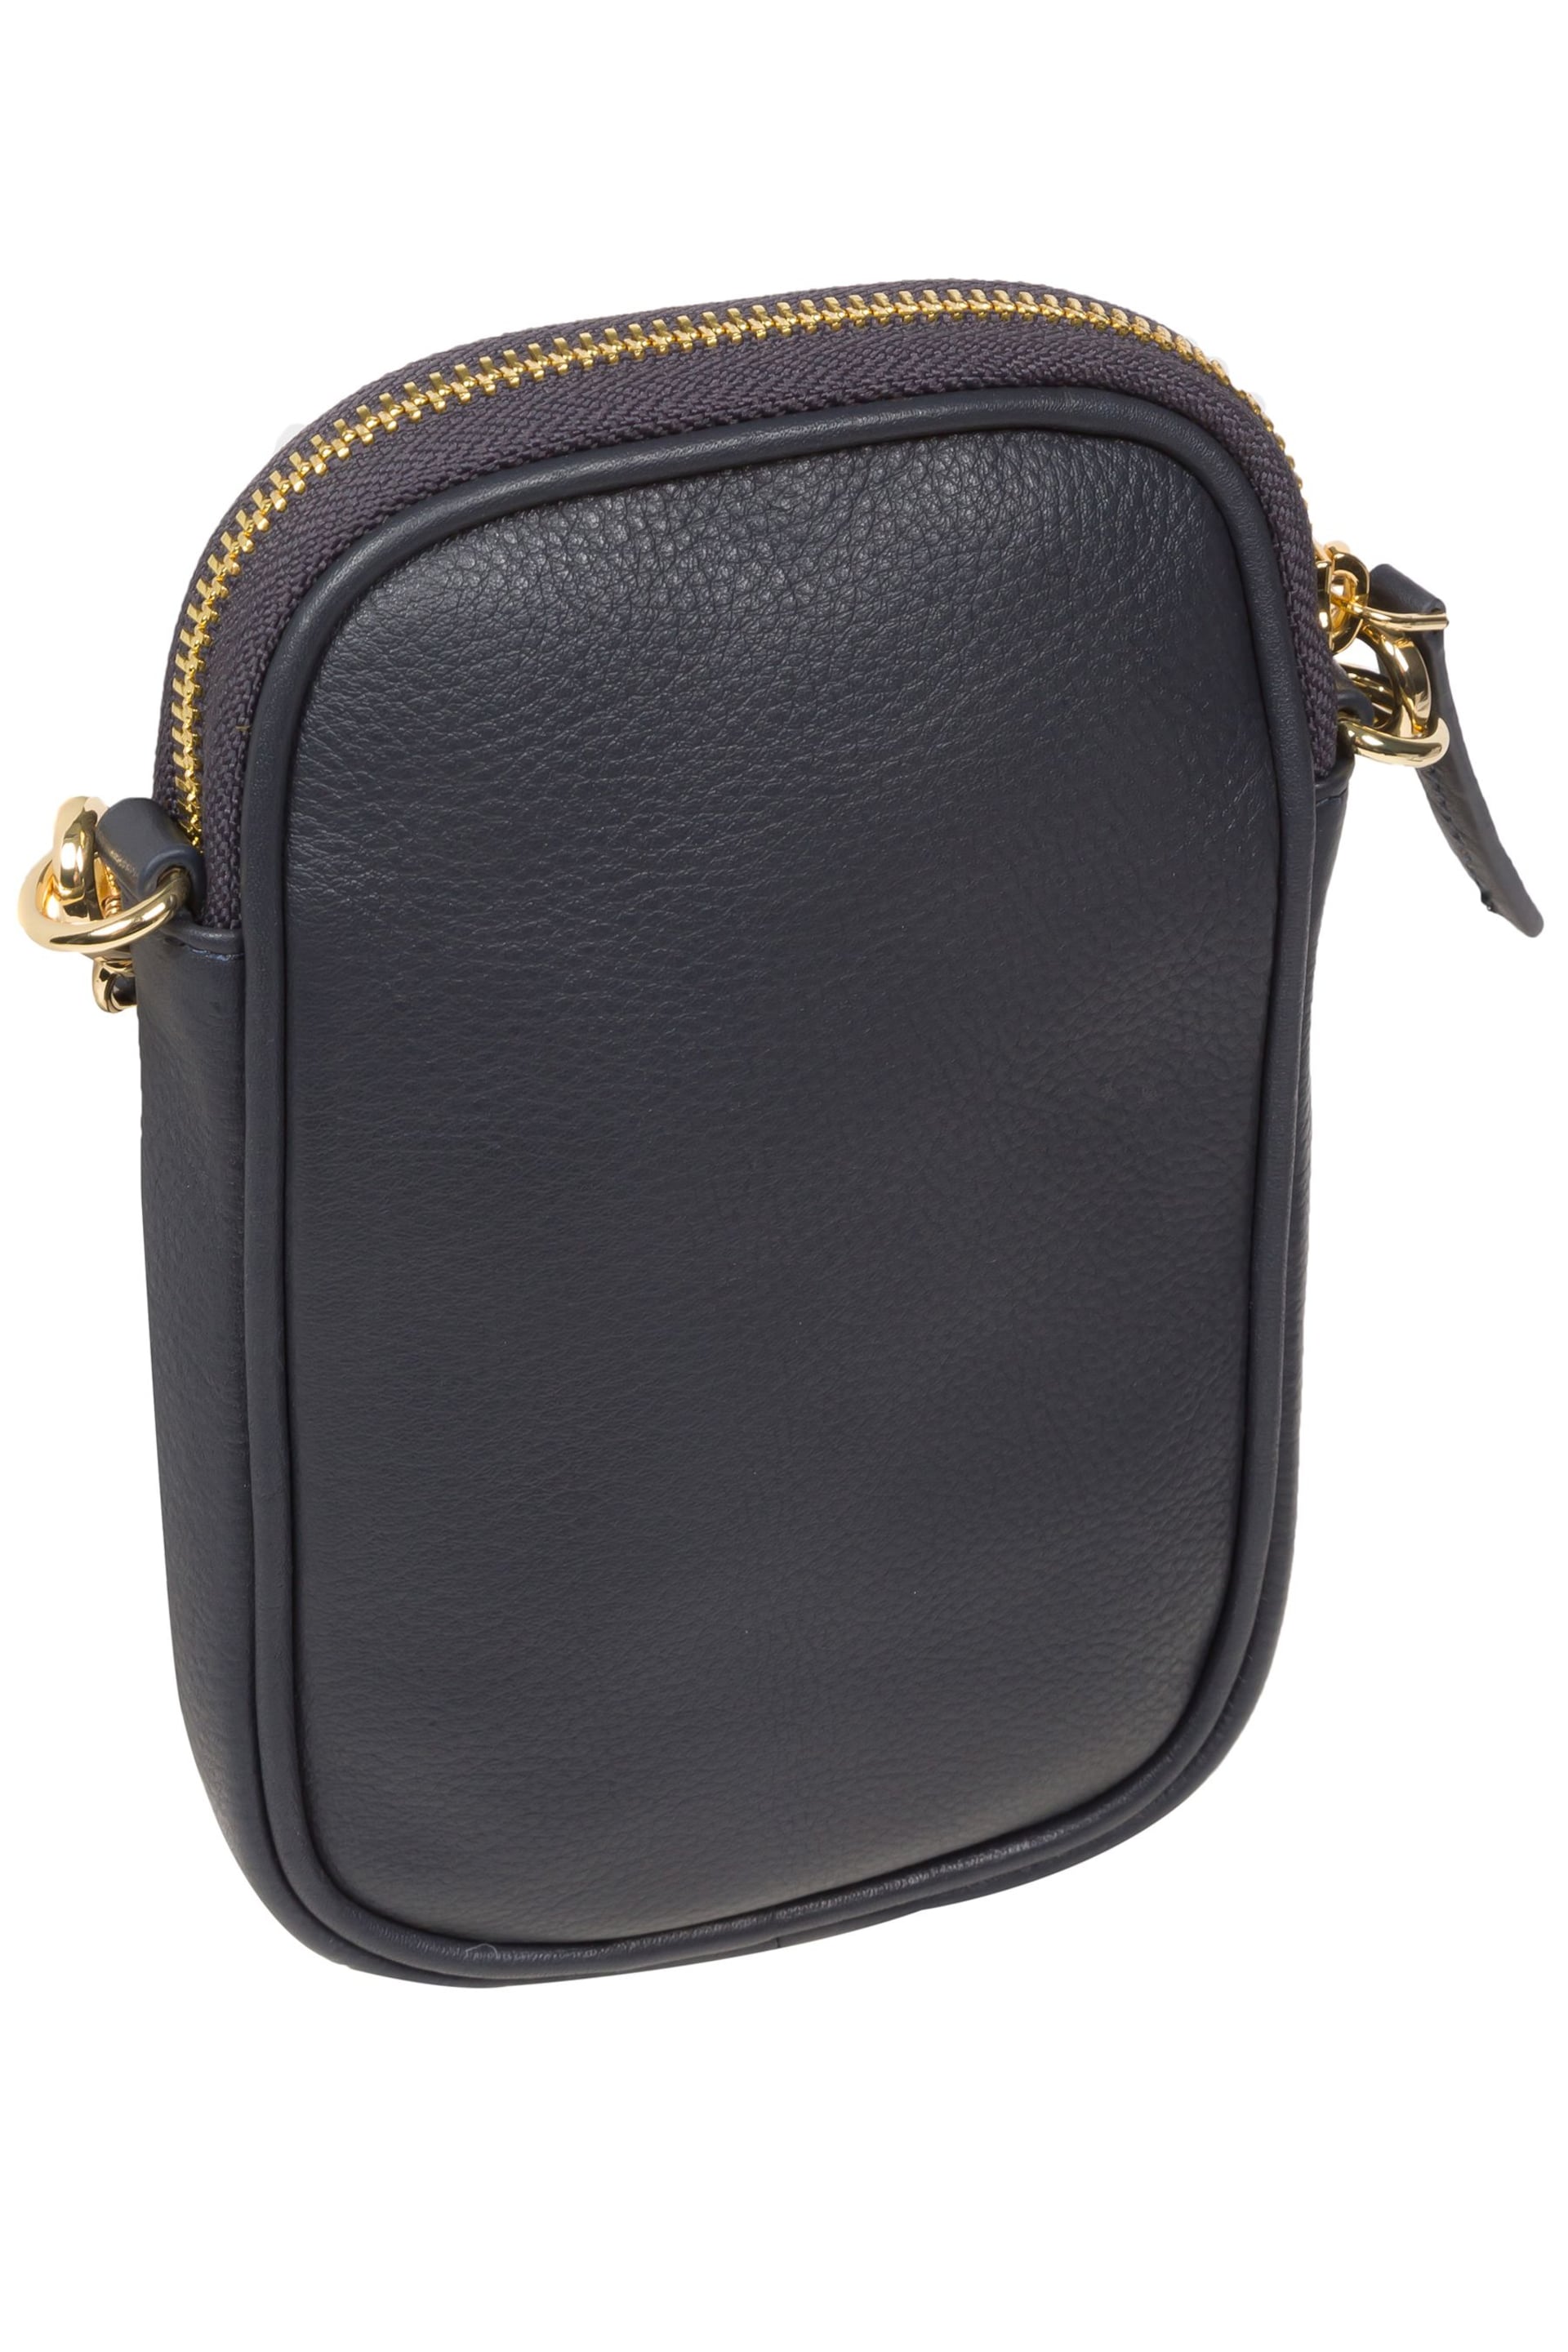 Pure Luxuries London Alaina Nappa Leather Cross-Body Phone Bag - Image 2 of 5